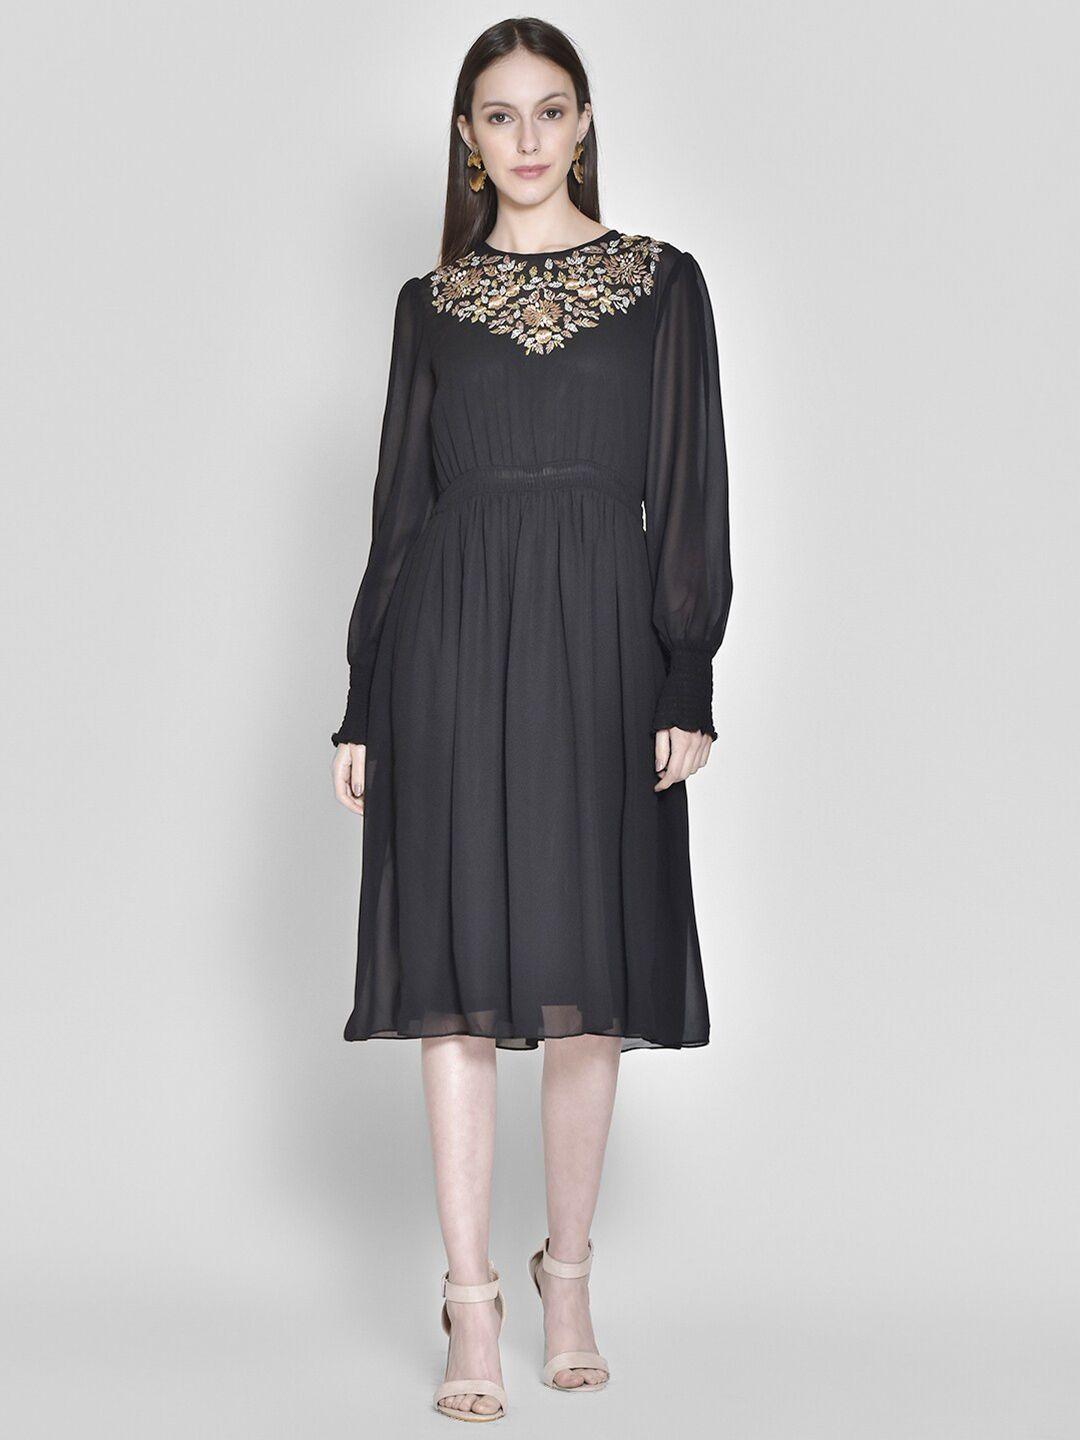 250-designs-women-black-floral-embroidered-georgette-dress